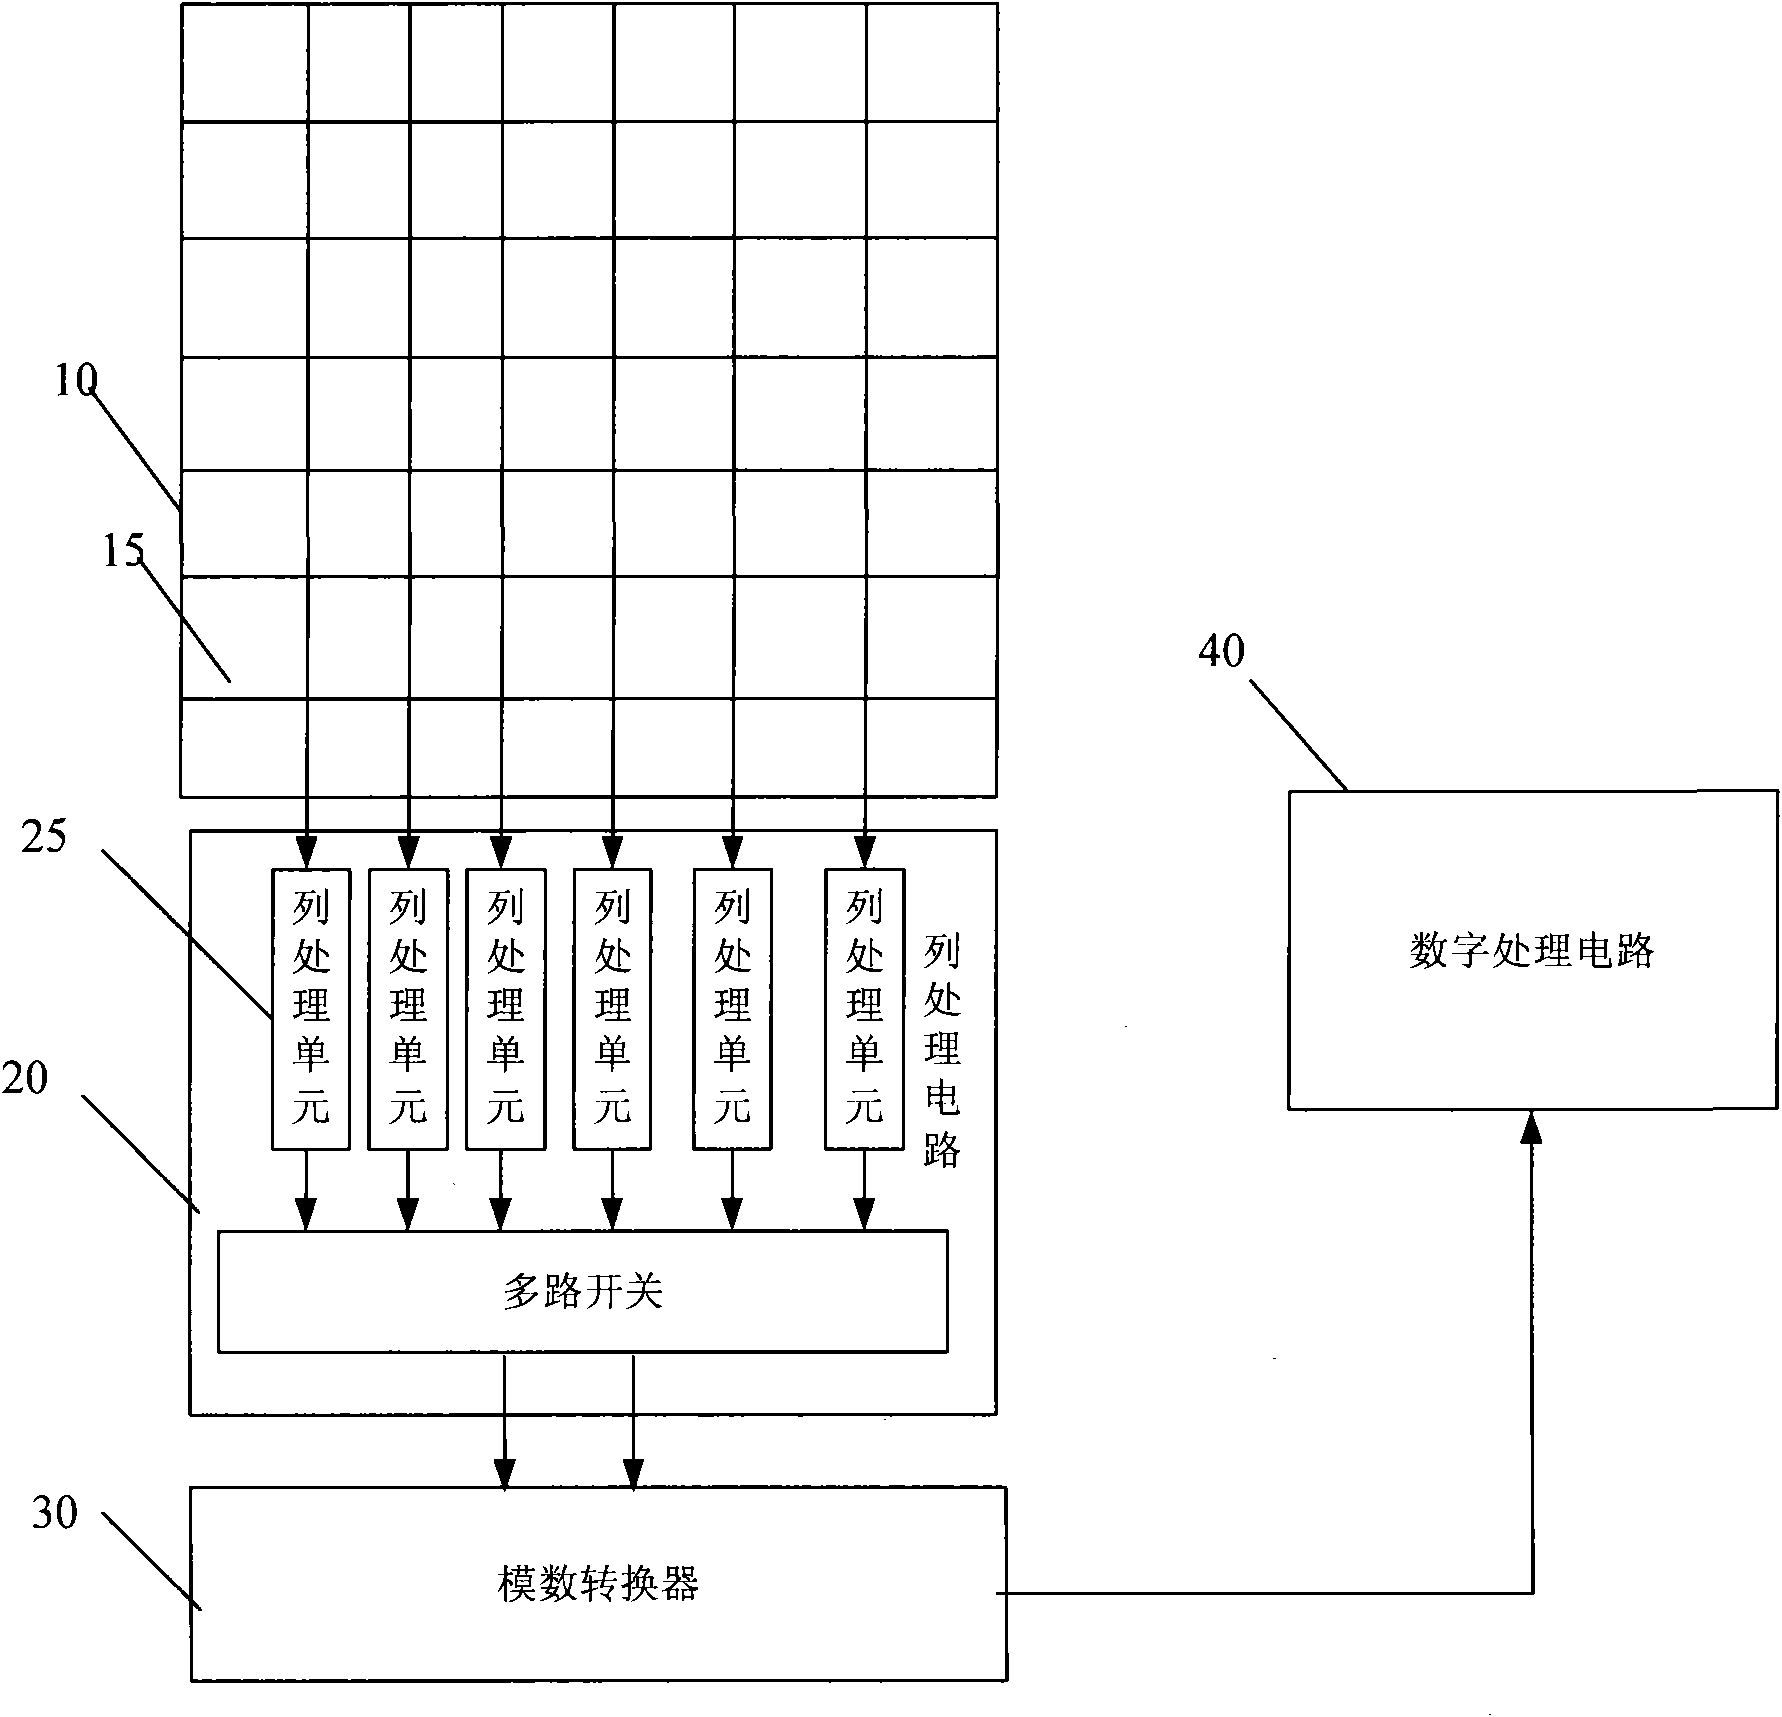 Image sensor and column processing circuit thereof